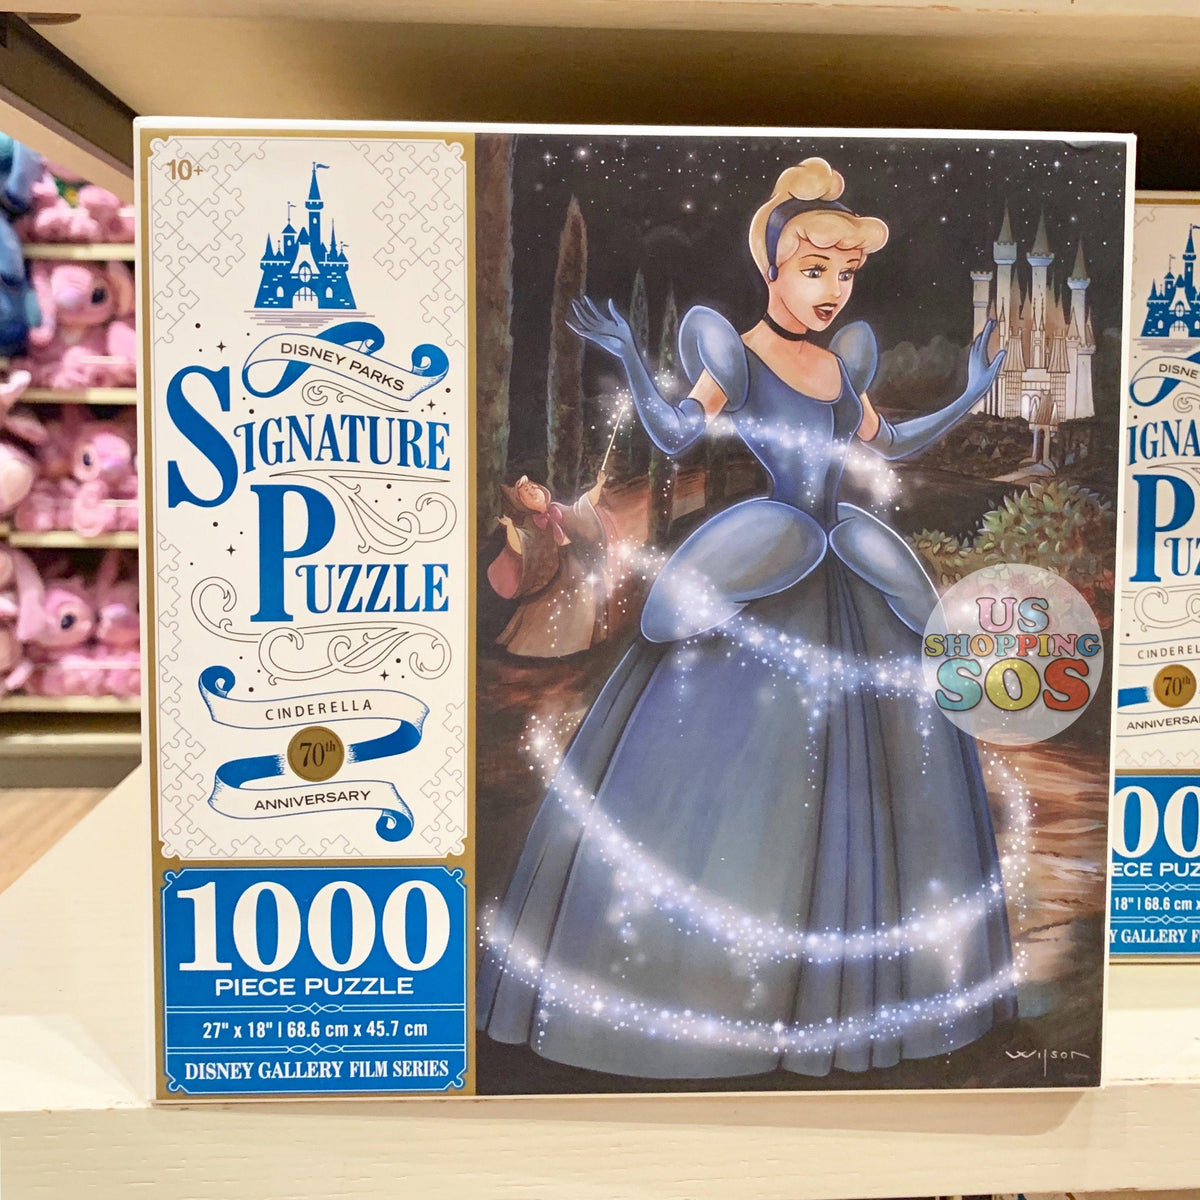 Disney Parks Signature Puzzle Lilo And Stitch 1000 Piece Puzzle Brand New